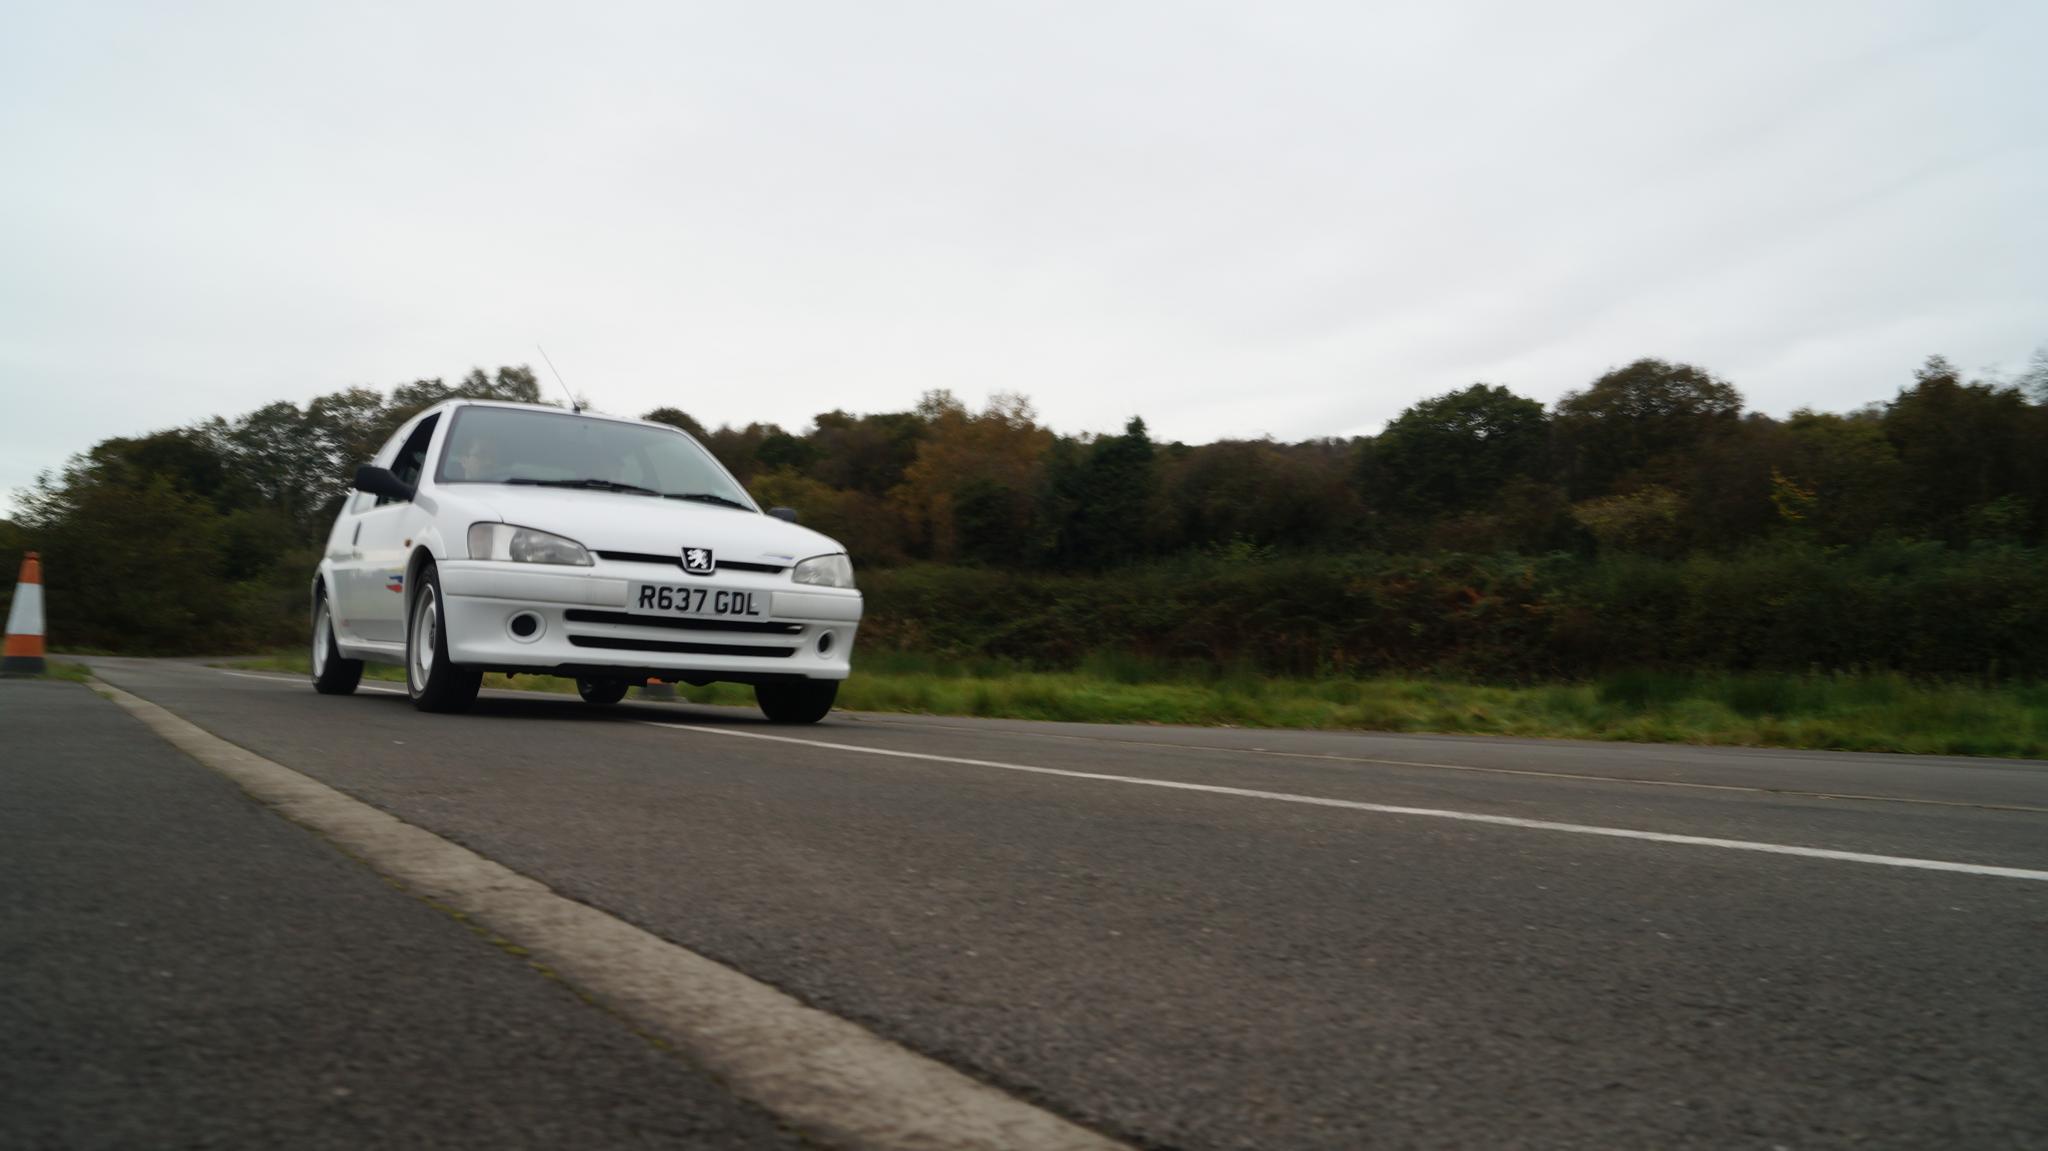 Our Classics: 1998 Peugeot 106 Rallye S2